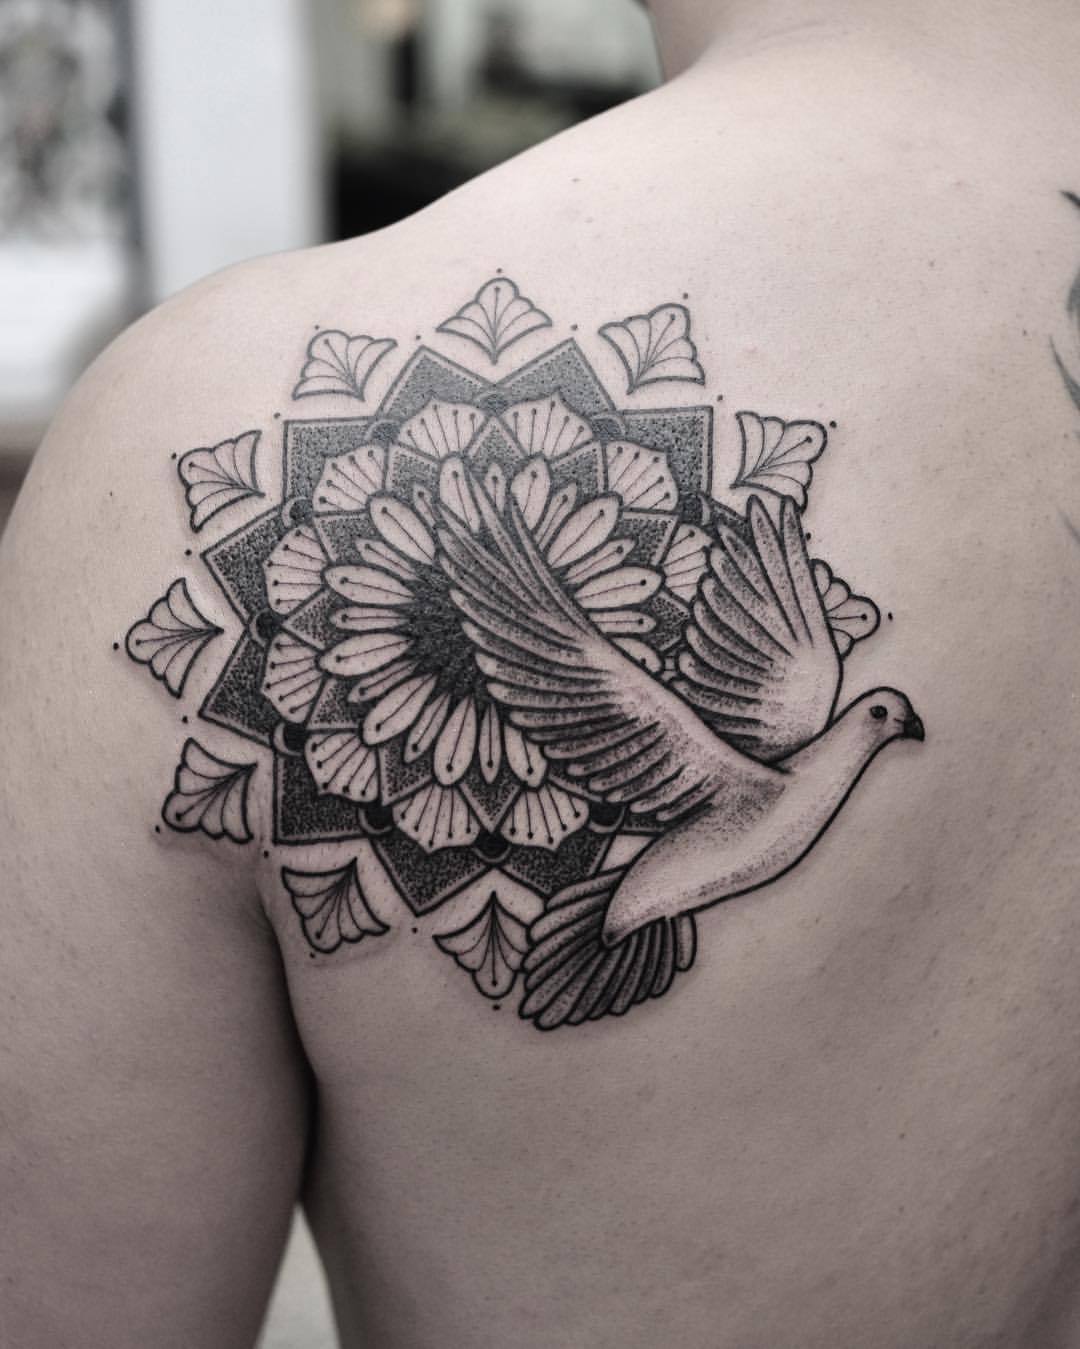 chris jones tattooer — Dove and mandala for Carl, thanks! Done...